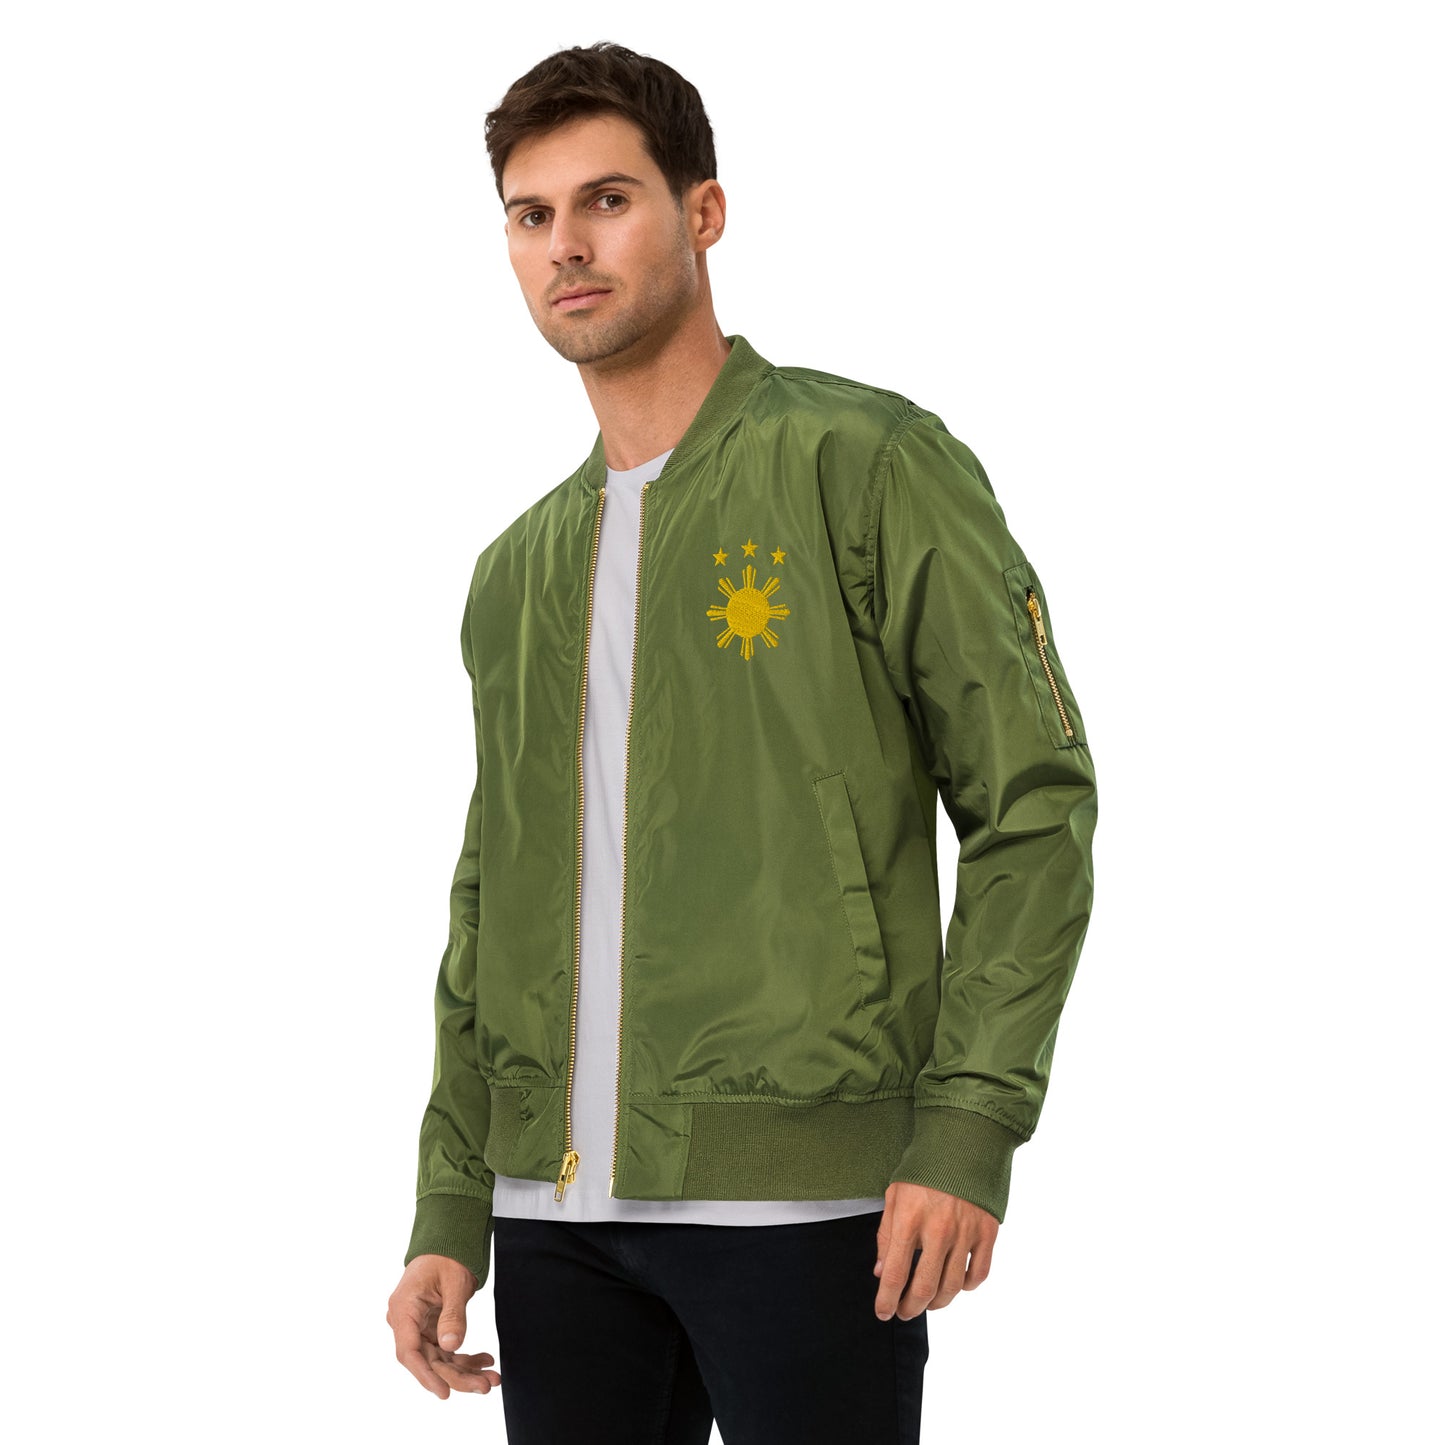 Tropical Warrior bomber jacket | Green - Yellow